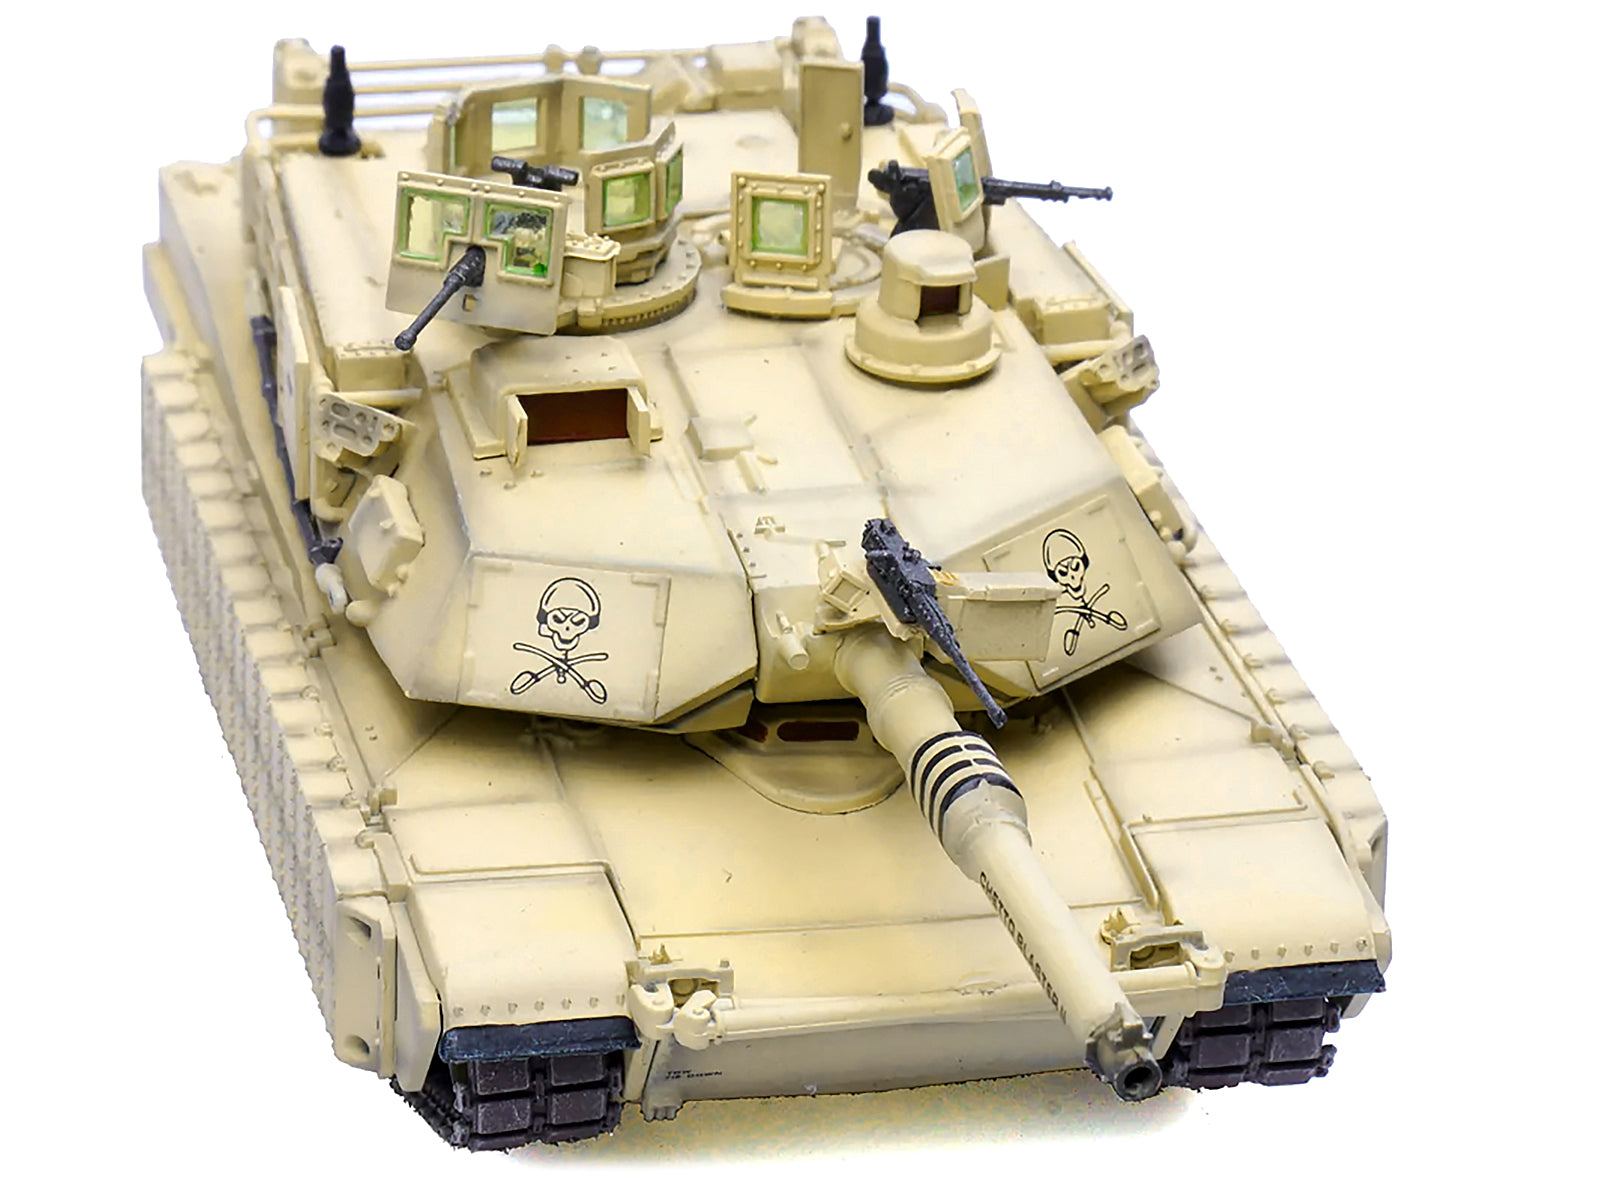 m1a2 tusk tank ghetto blaster 3rd squadron armoured cavalry 1/72 diecast model